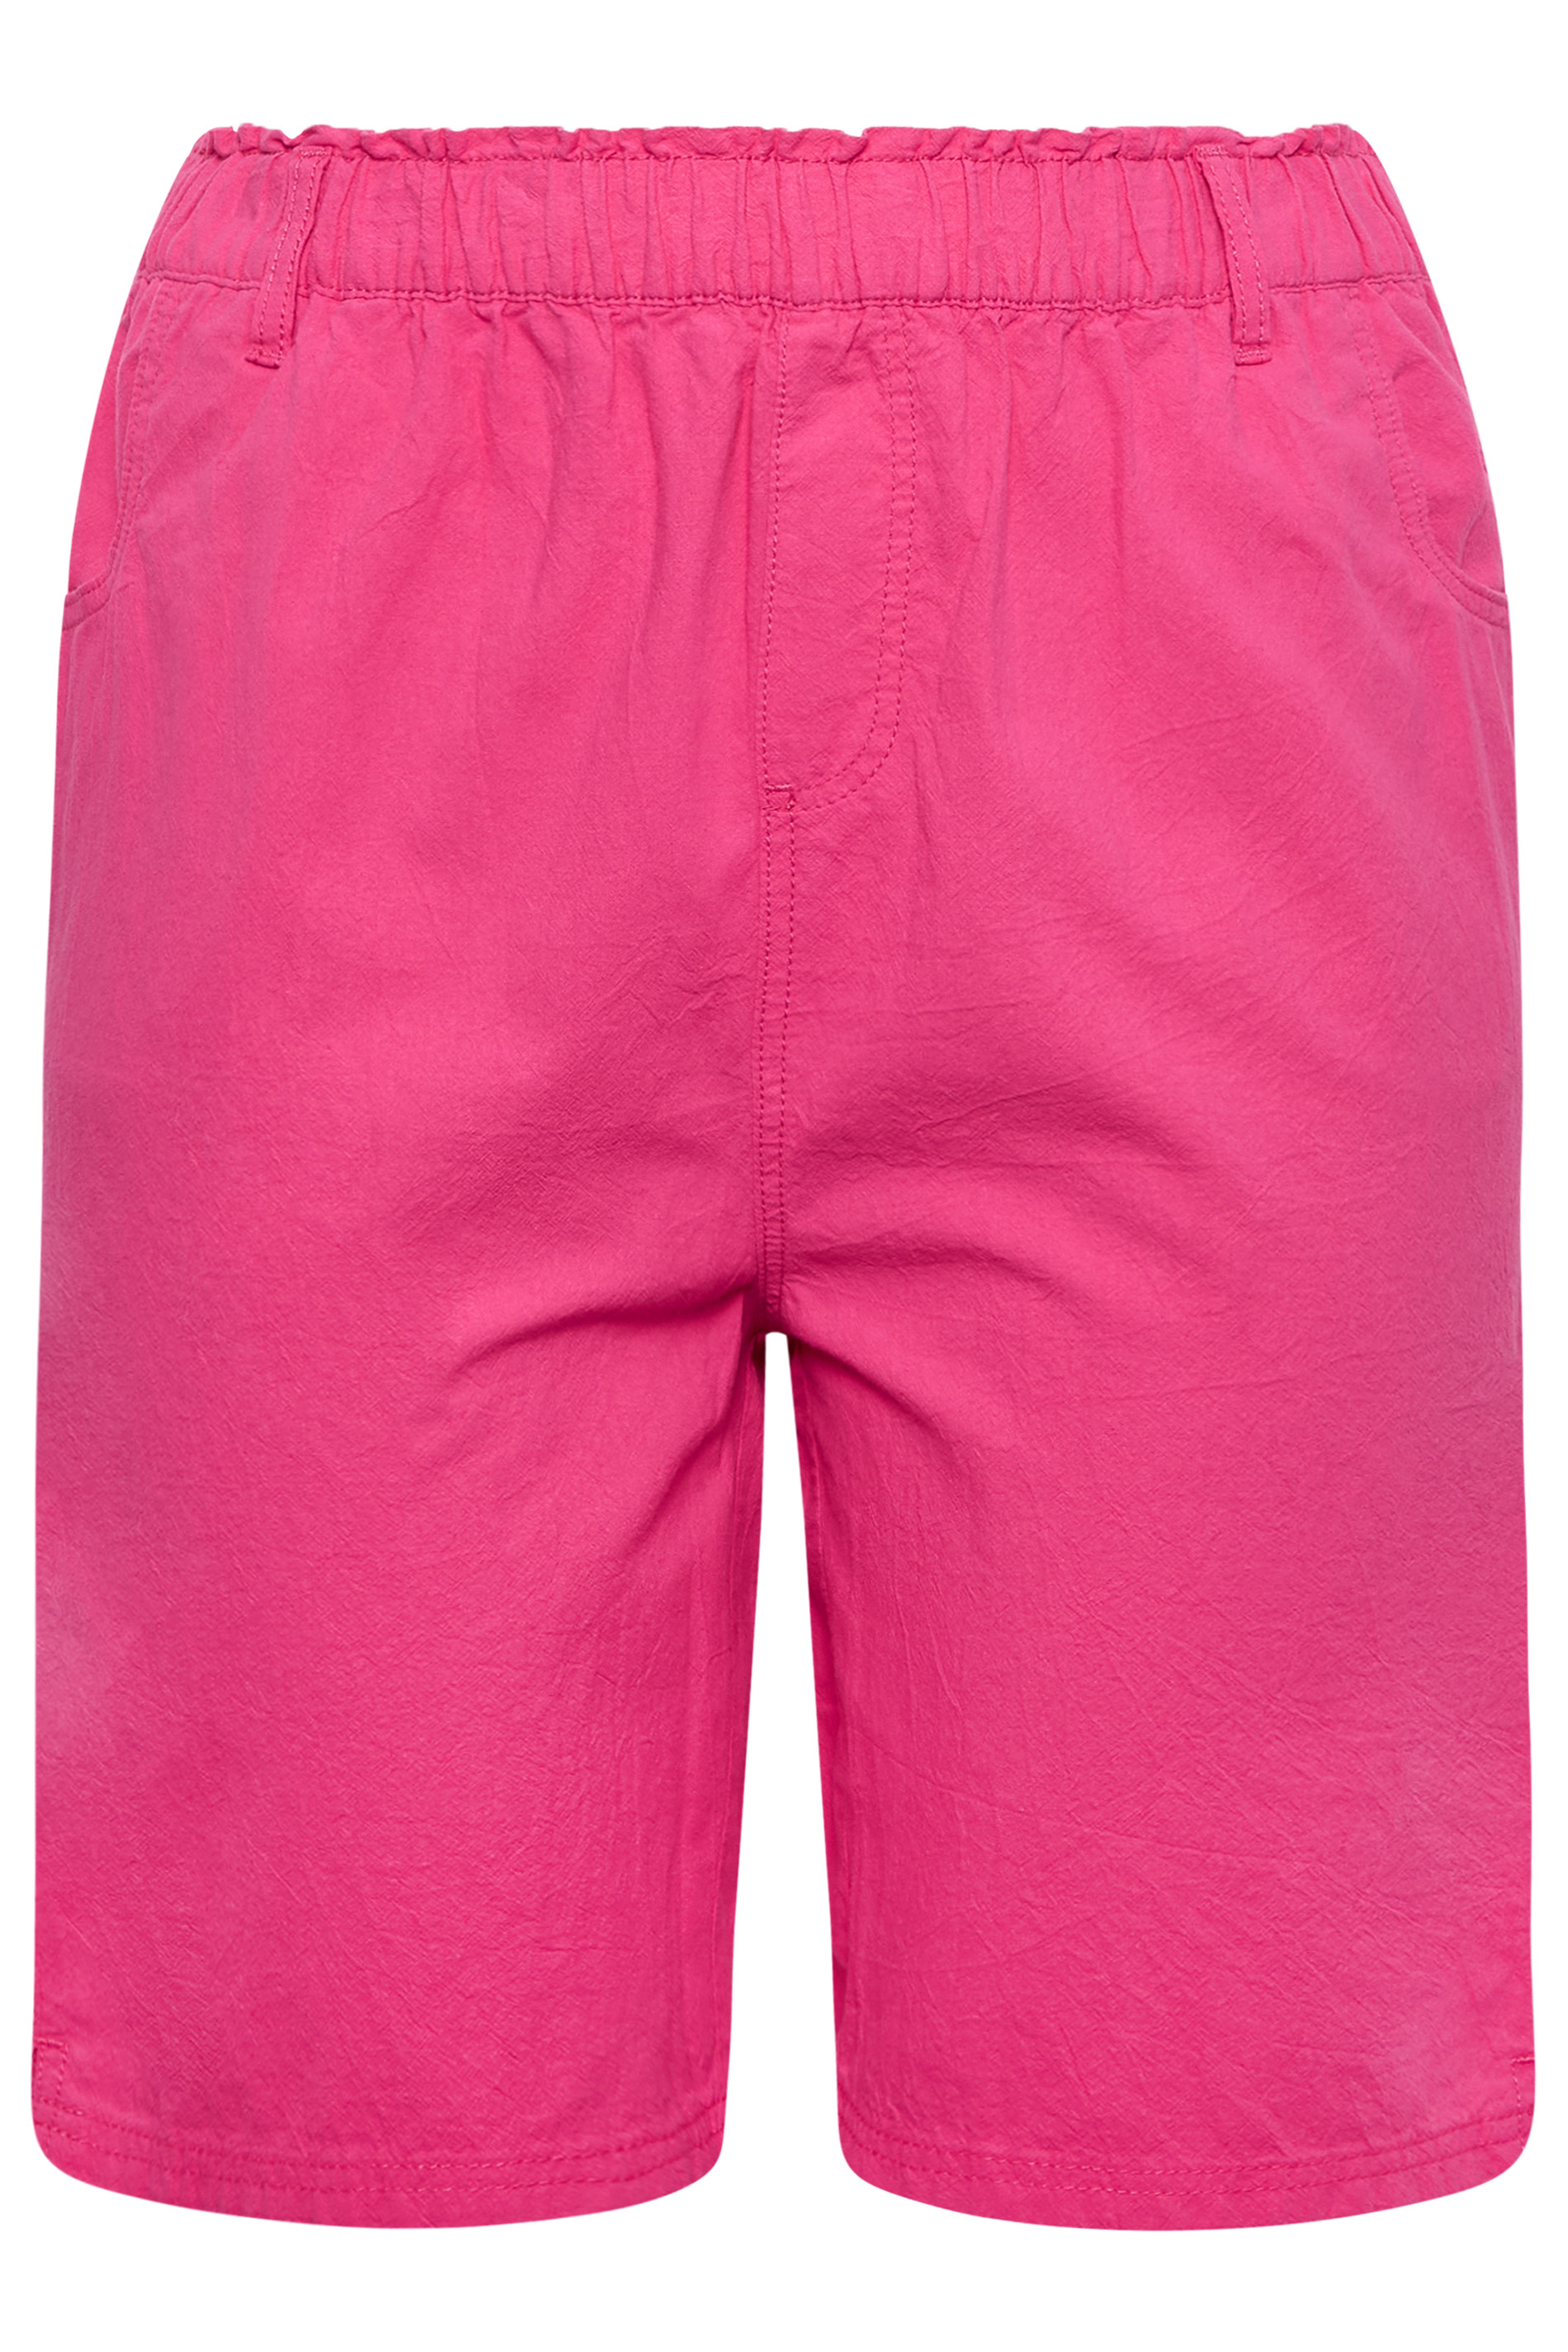 YOURS Curve Plus Size Hot Pink Cotton Shorts